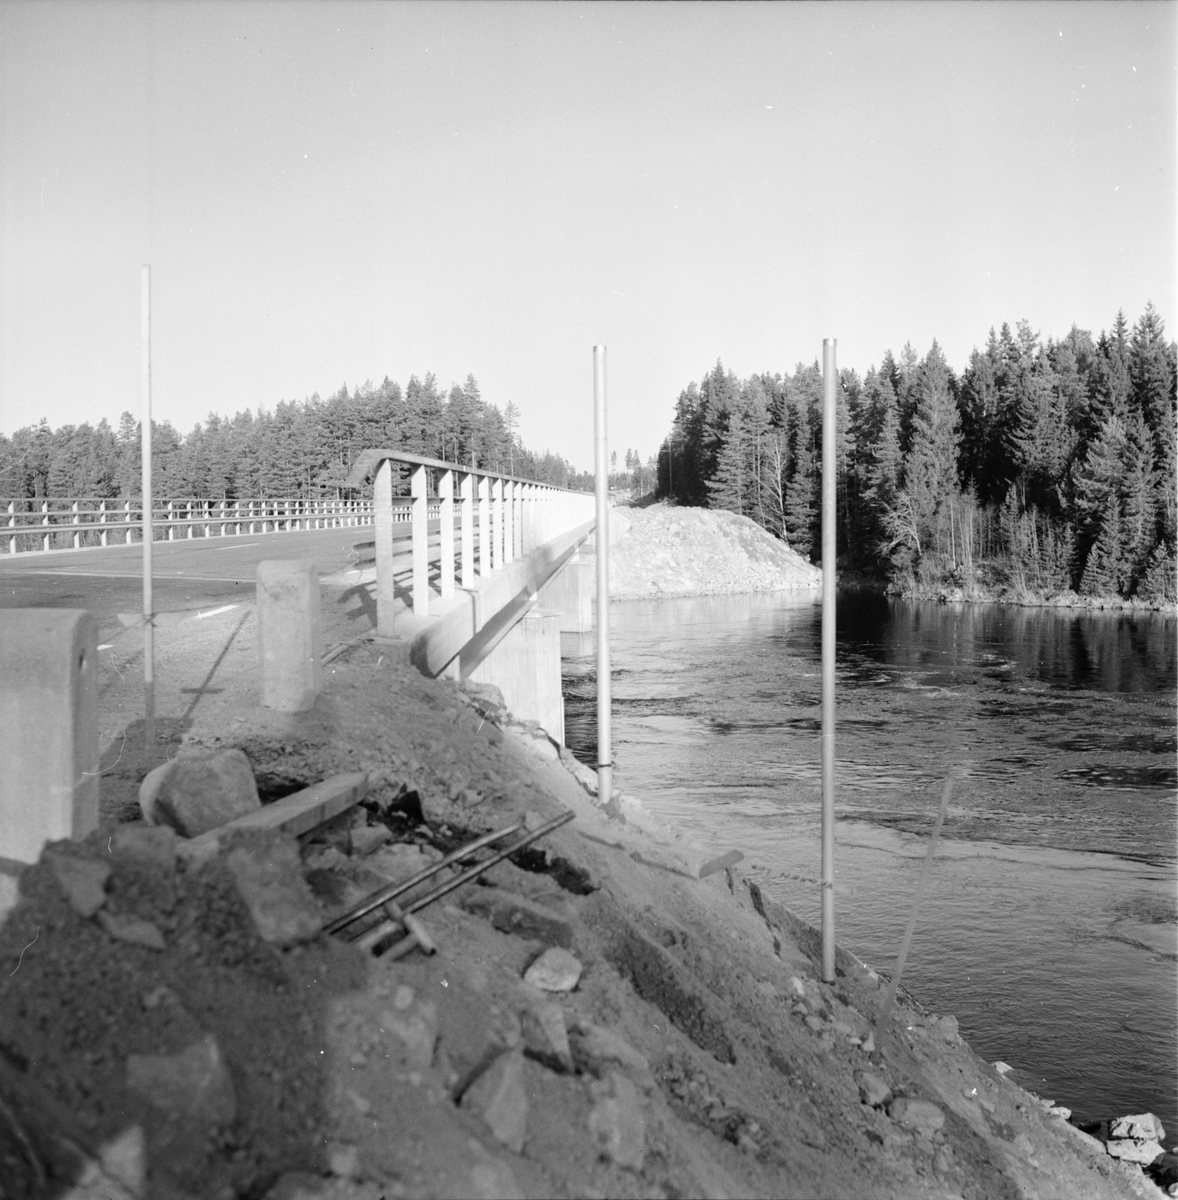 E4.
Ljusne-Söderhamn,
Renskallabron,
8 Nov 1964